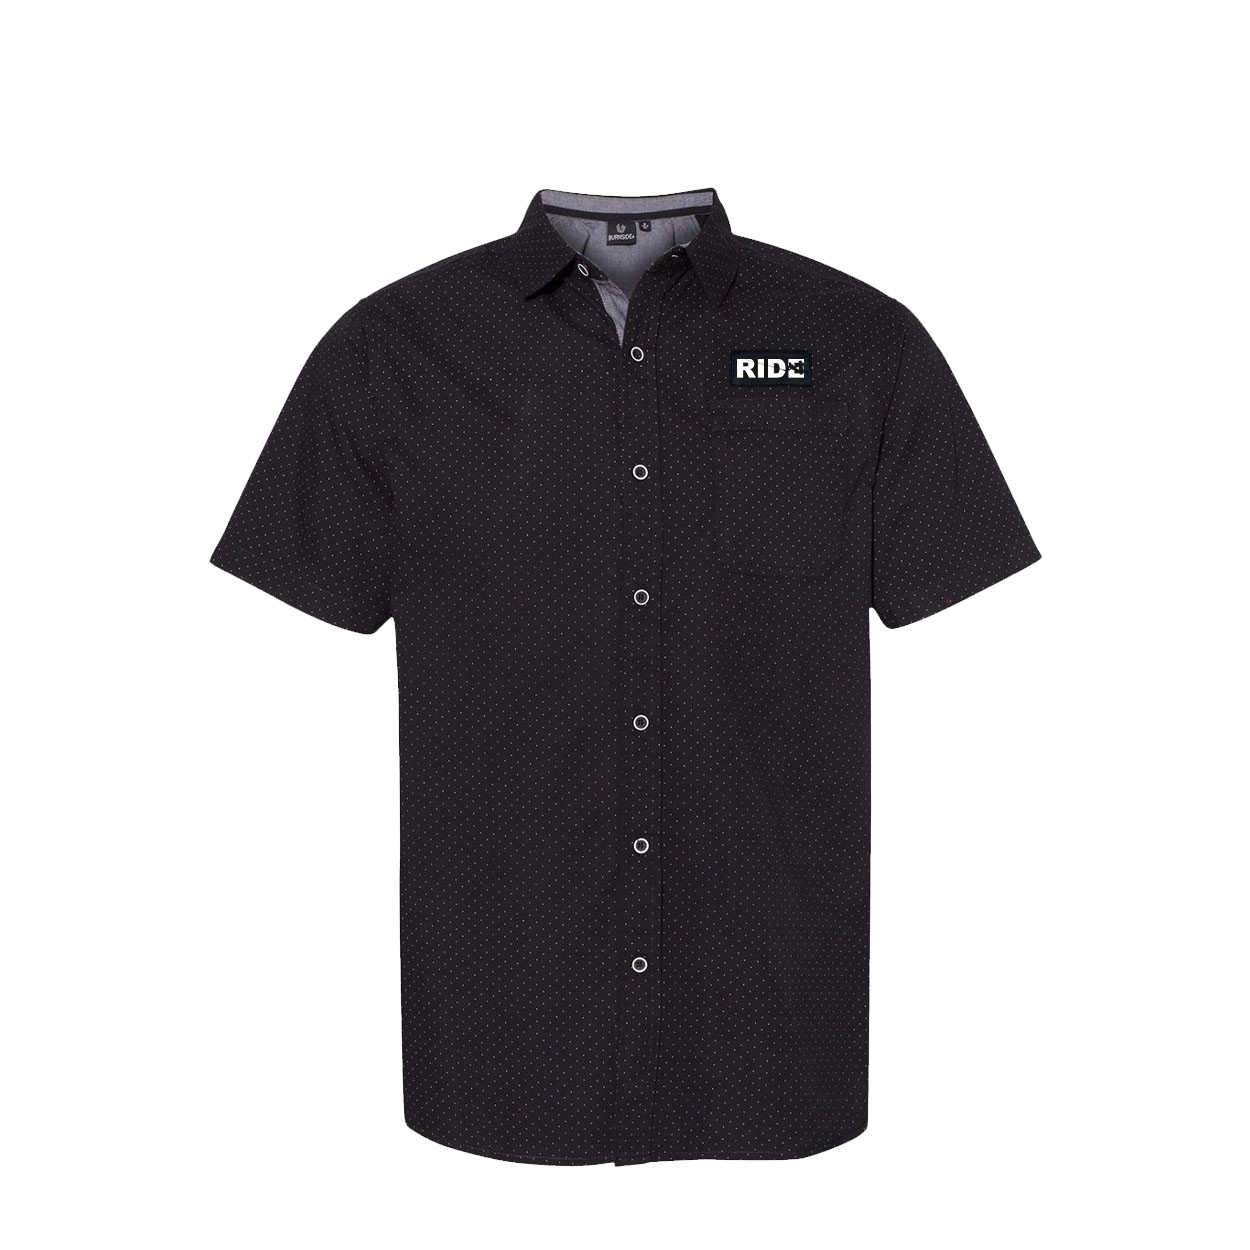 Ride Wakeboard Logo Classic Poplin Short Sleeve Woven Shirt Black/White Dot (White Logo)